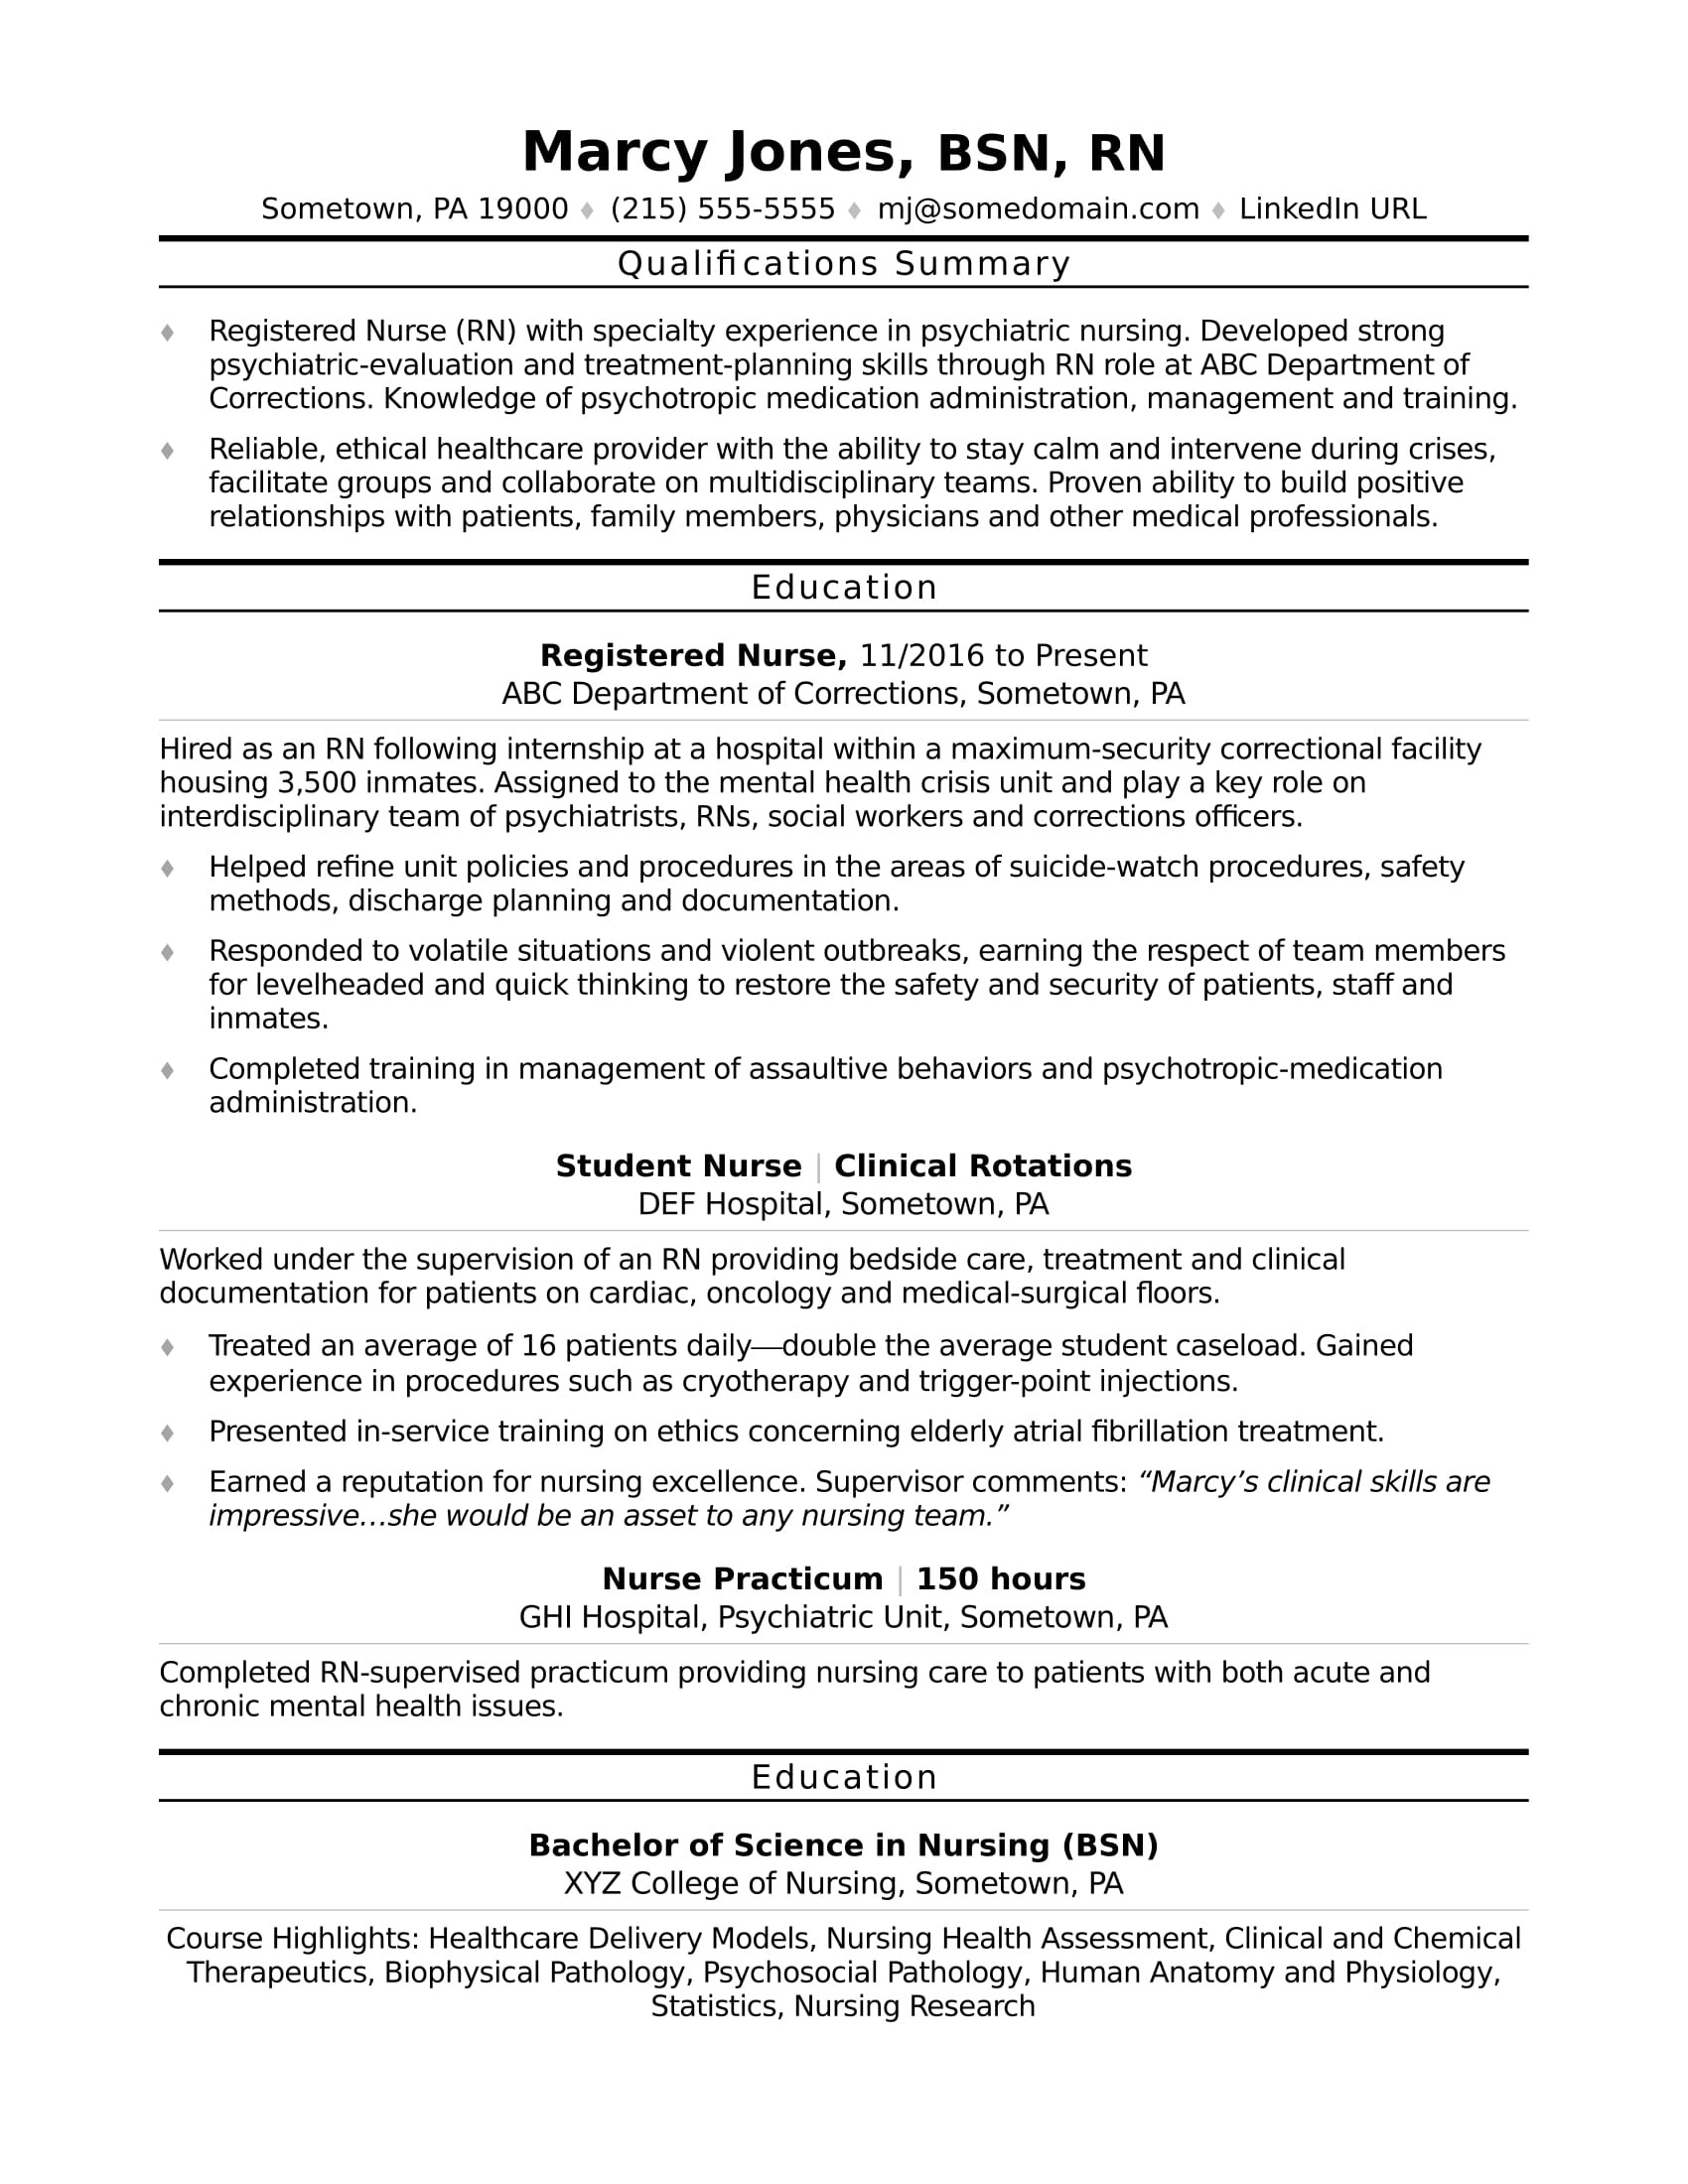 Recent Graduate Vocational Nurse Summary Resume Samples Non License Entry-level Nurse Resume Monster.com